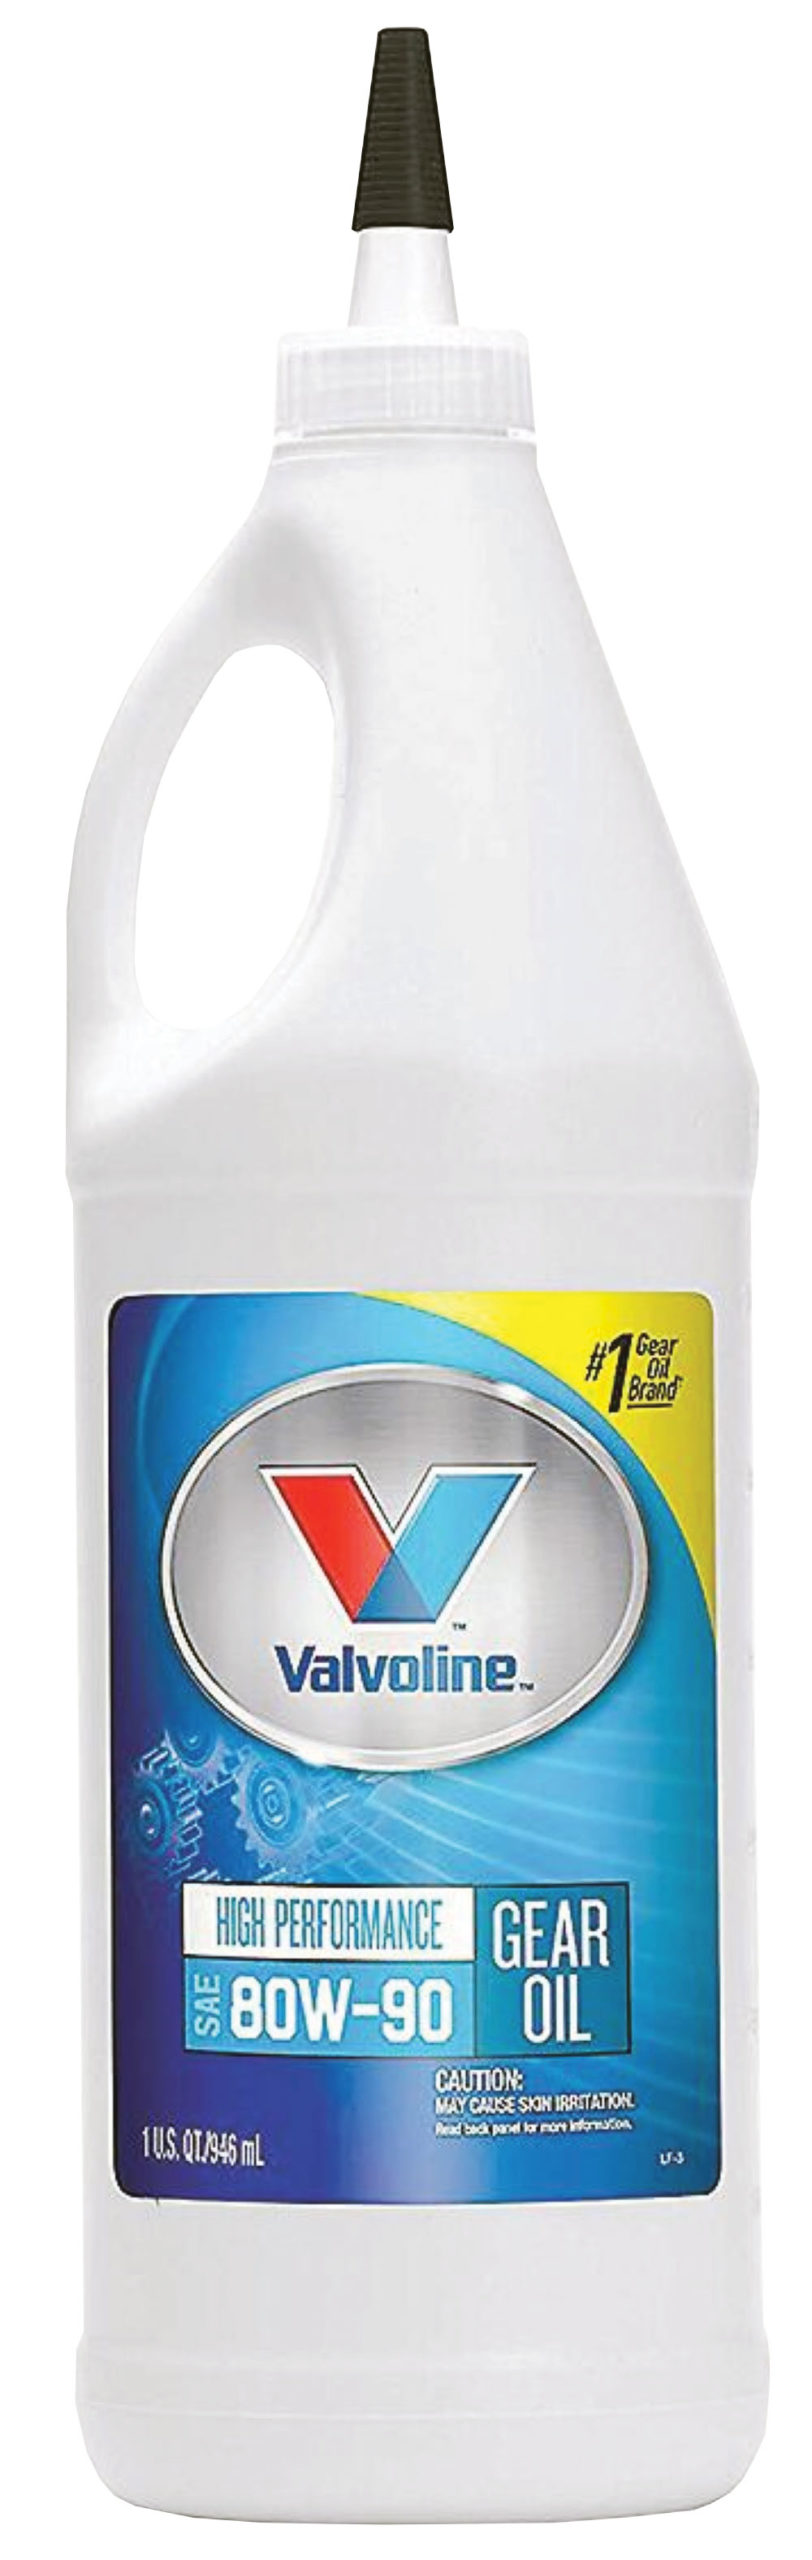 Valvoline High Performance Gear Oil